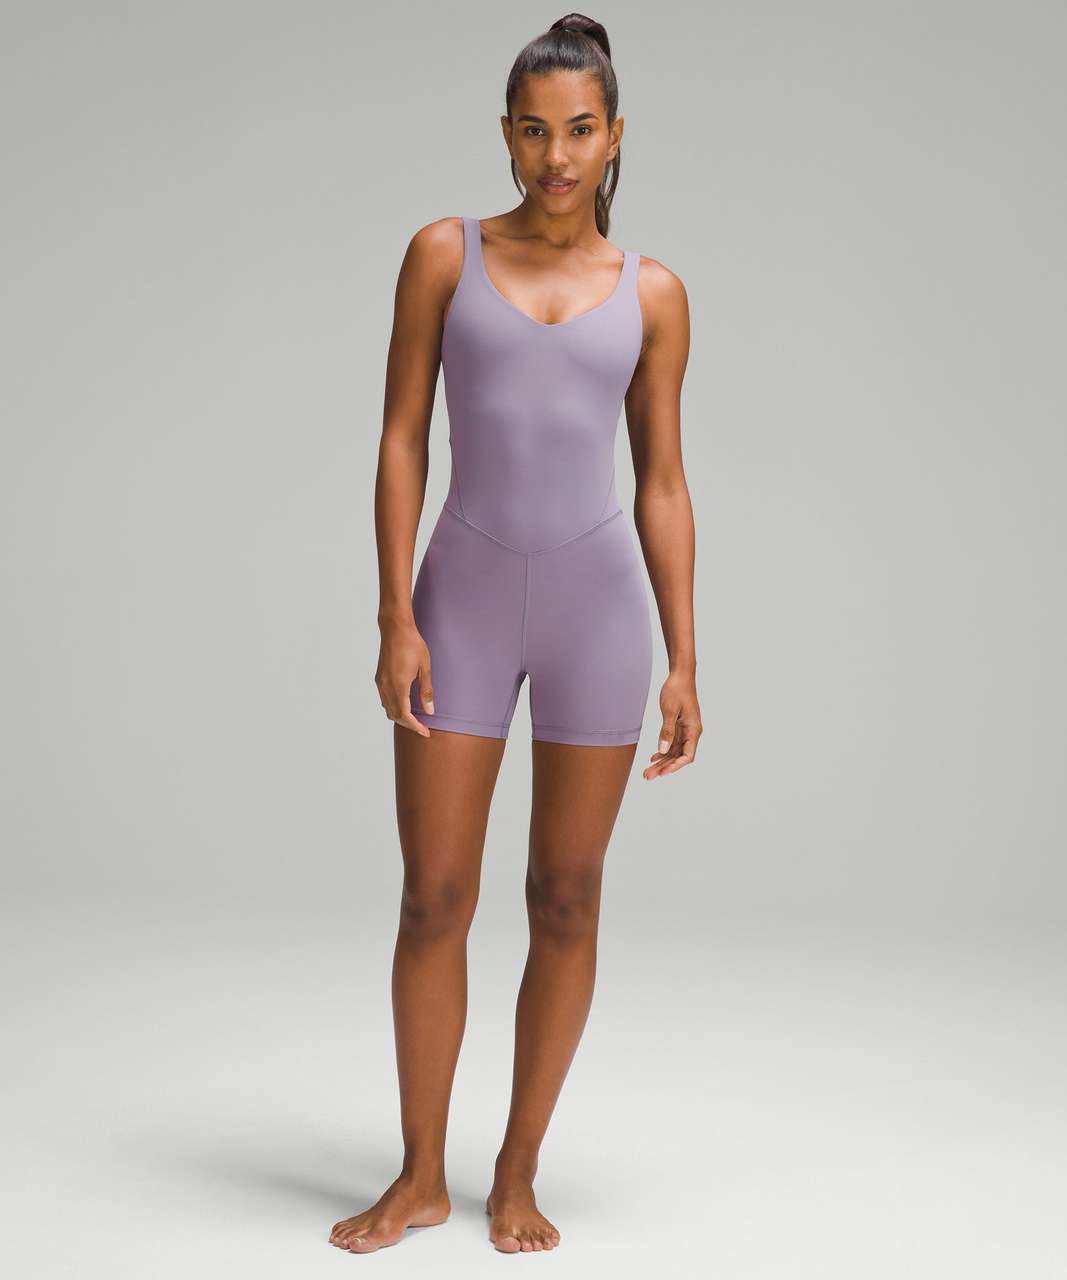 Camo purple womens Bodysuit for Exercise Jumpsuits